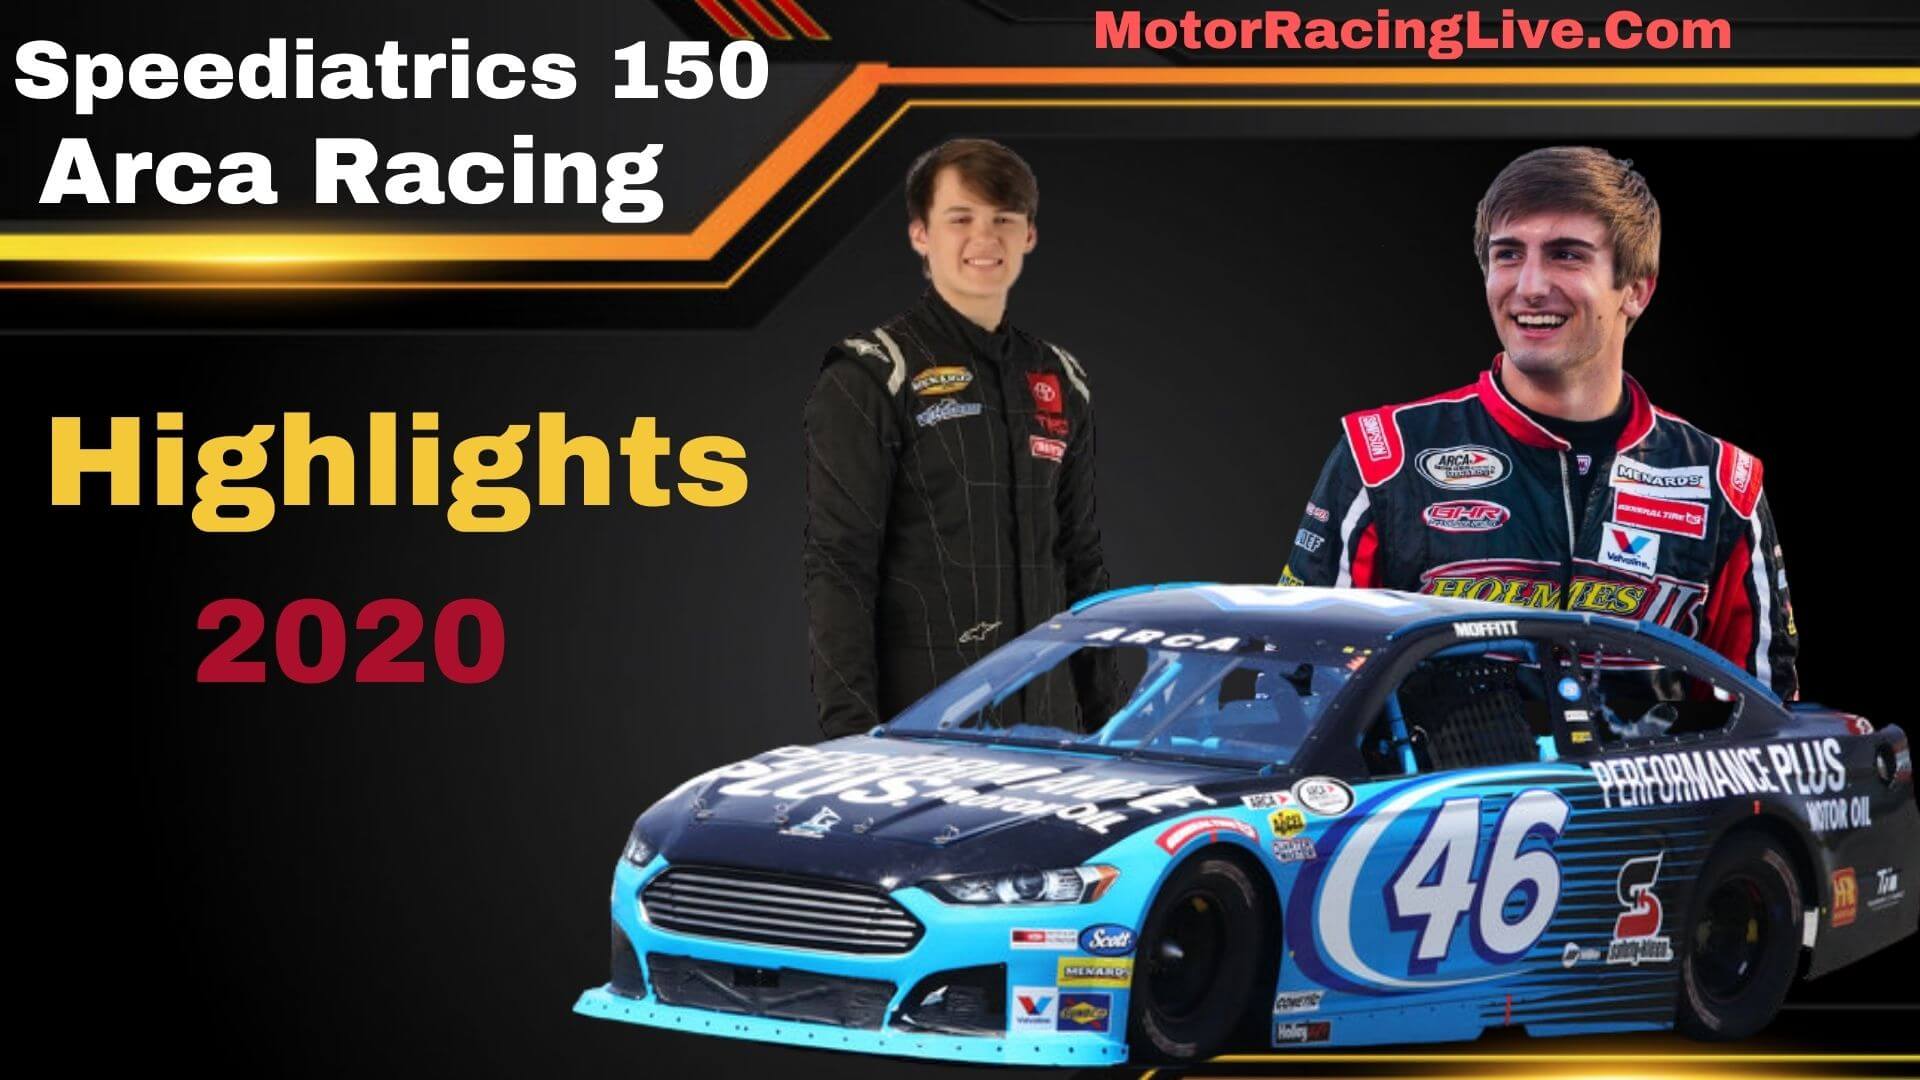 Speediatrics 150 Highlights Arca Racing 2020